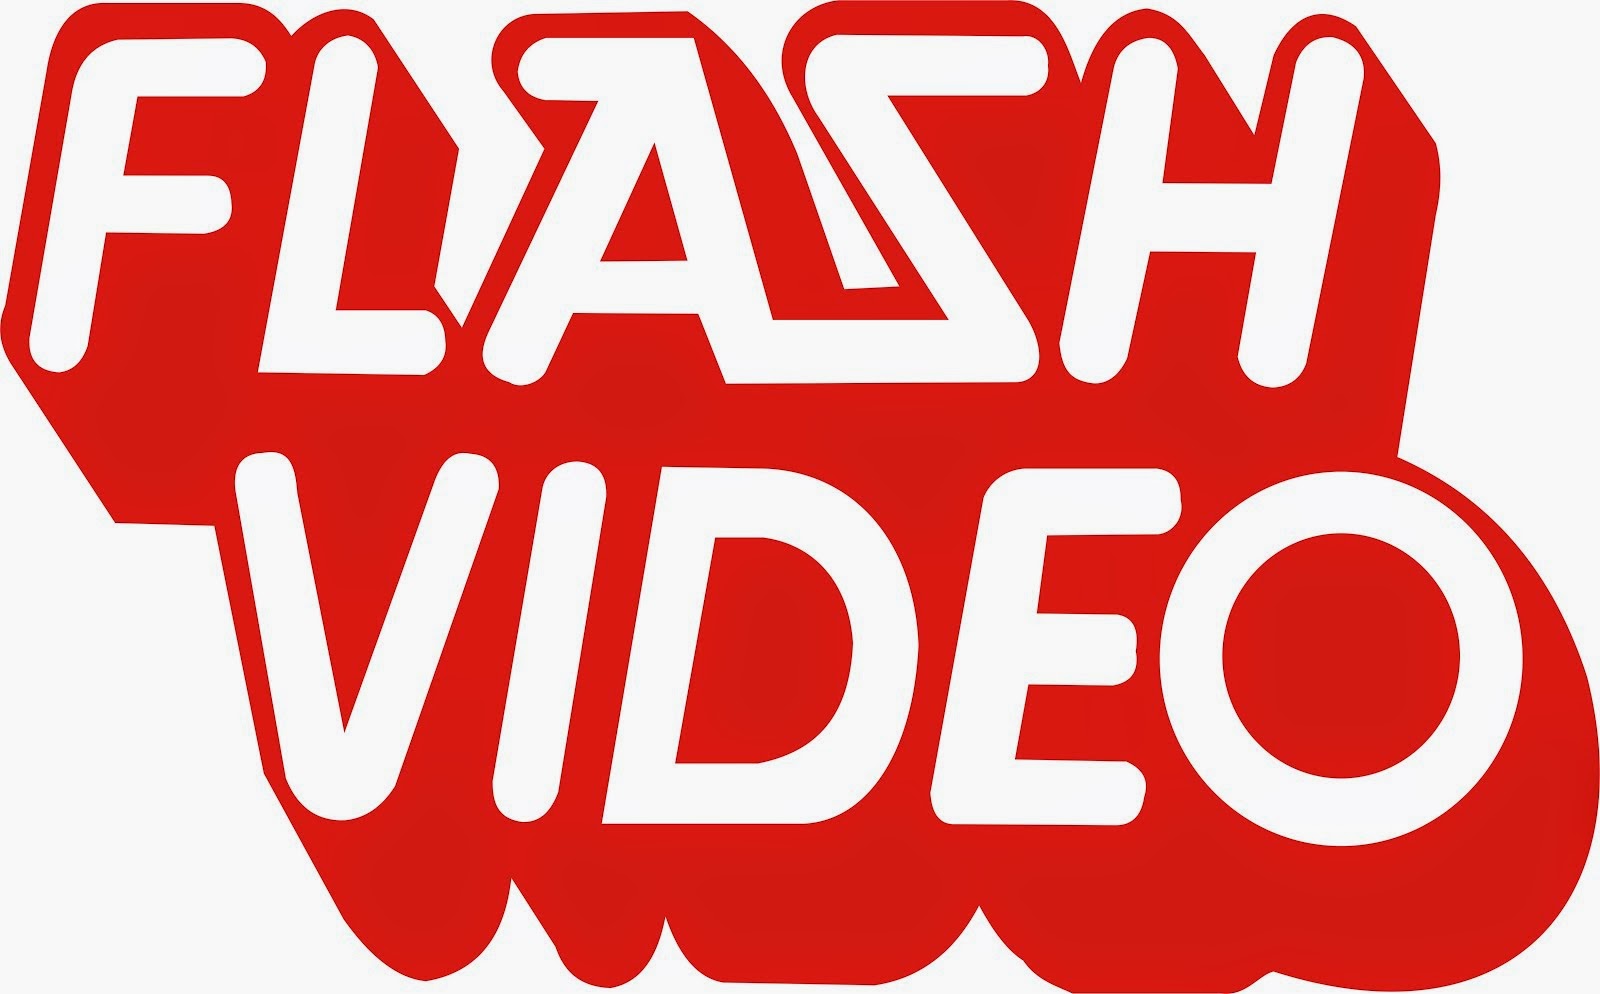 FLASH VIDEO